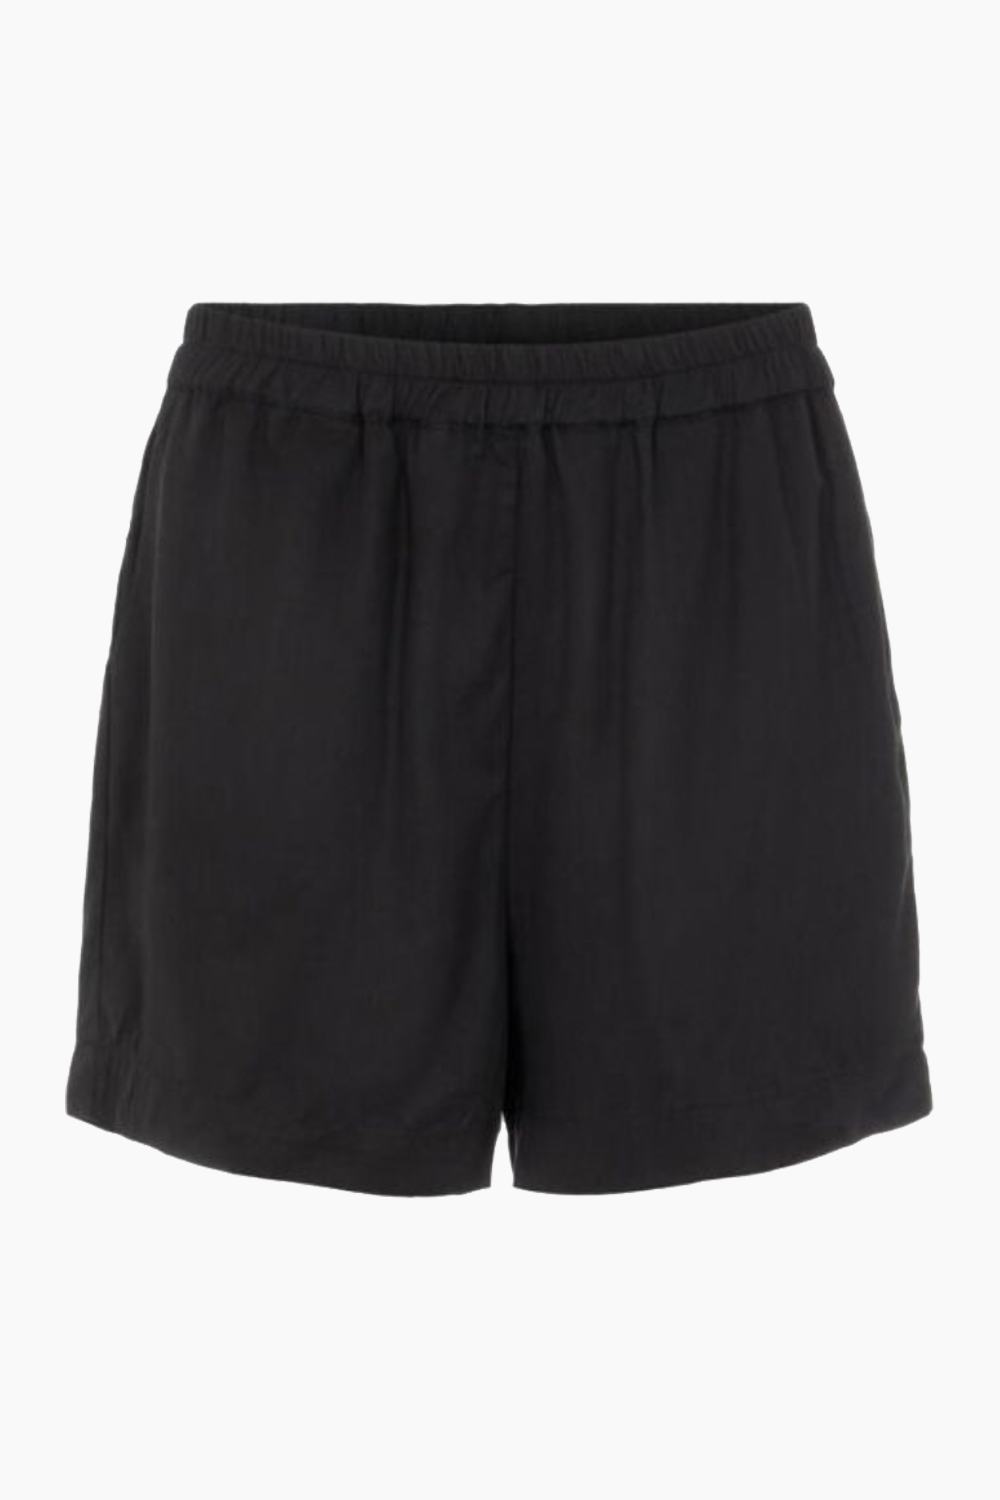 6: ObjTilda Hw Shorts Noos - Black - Object - Sort S